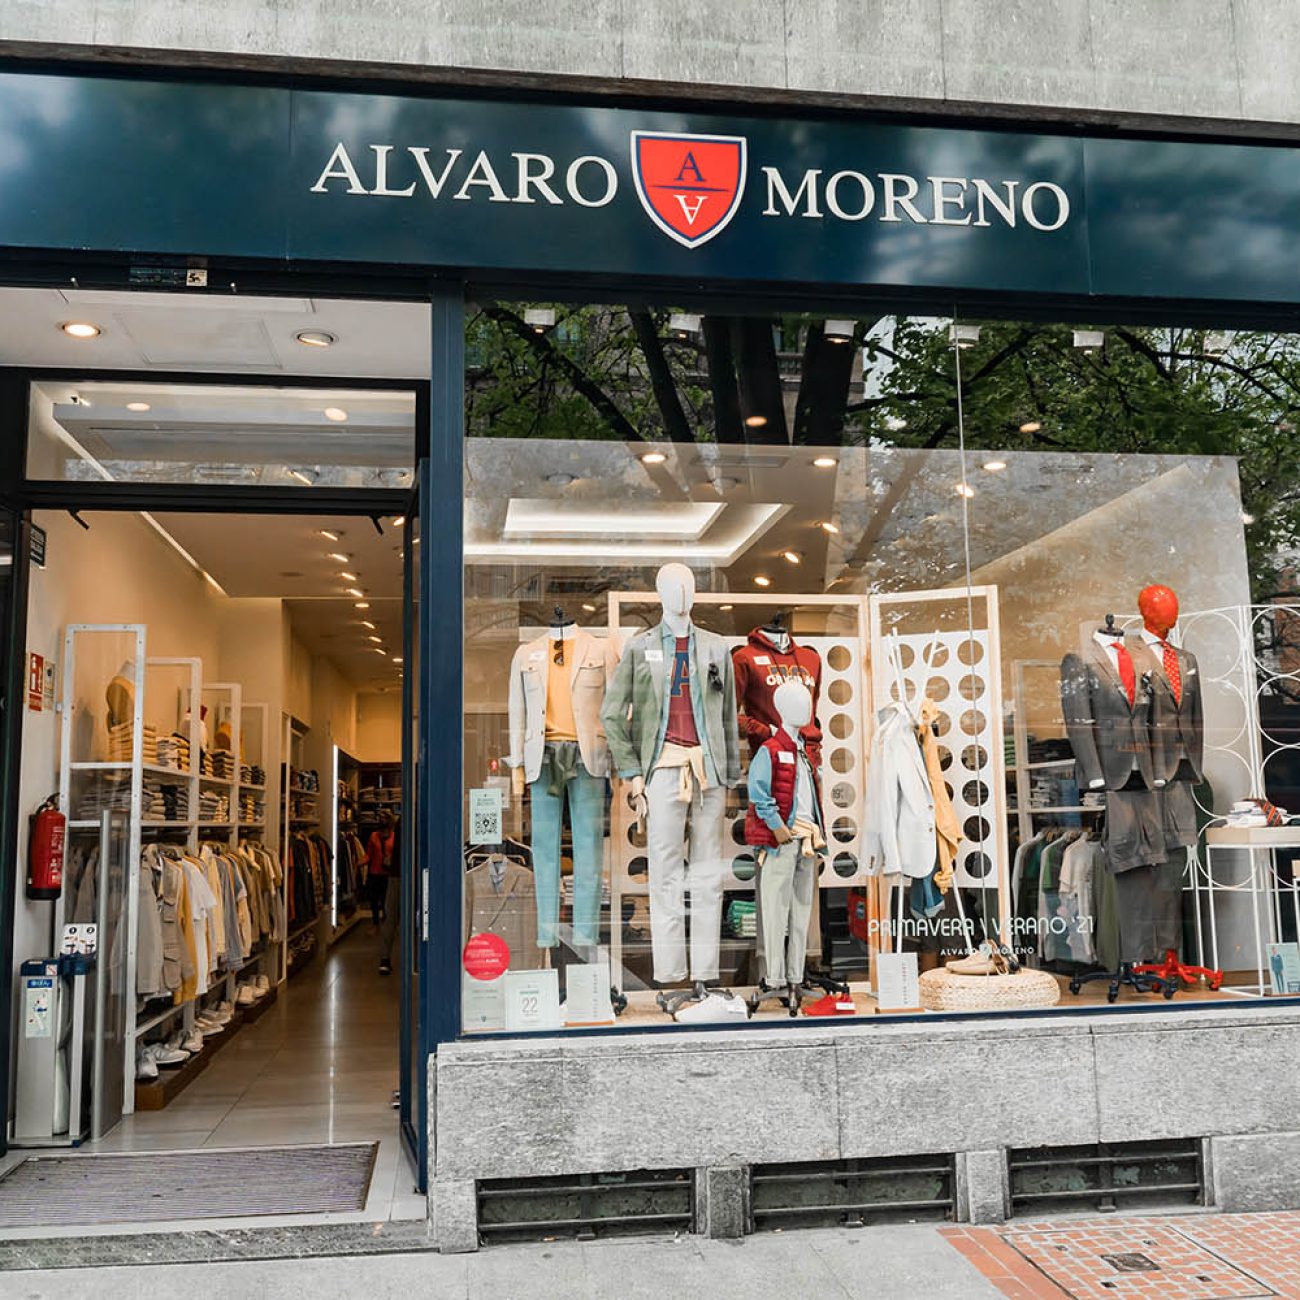 Aflojar Levántate Círculo de rodamiento Alvaro Moreno | Bilbao Dendak